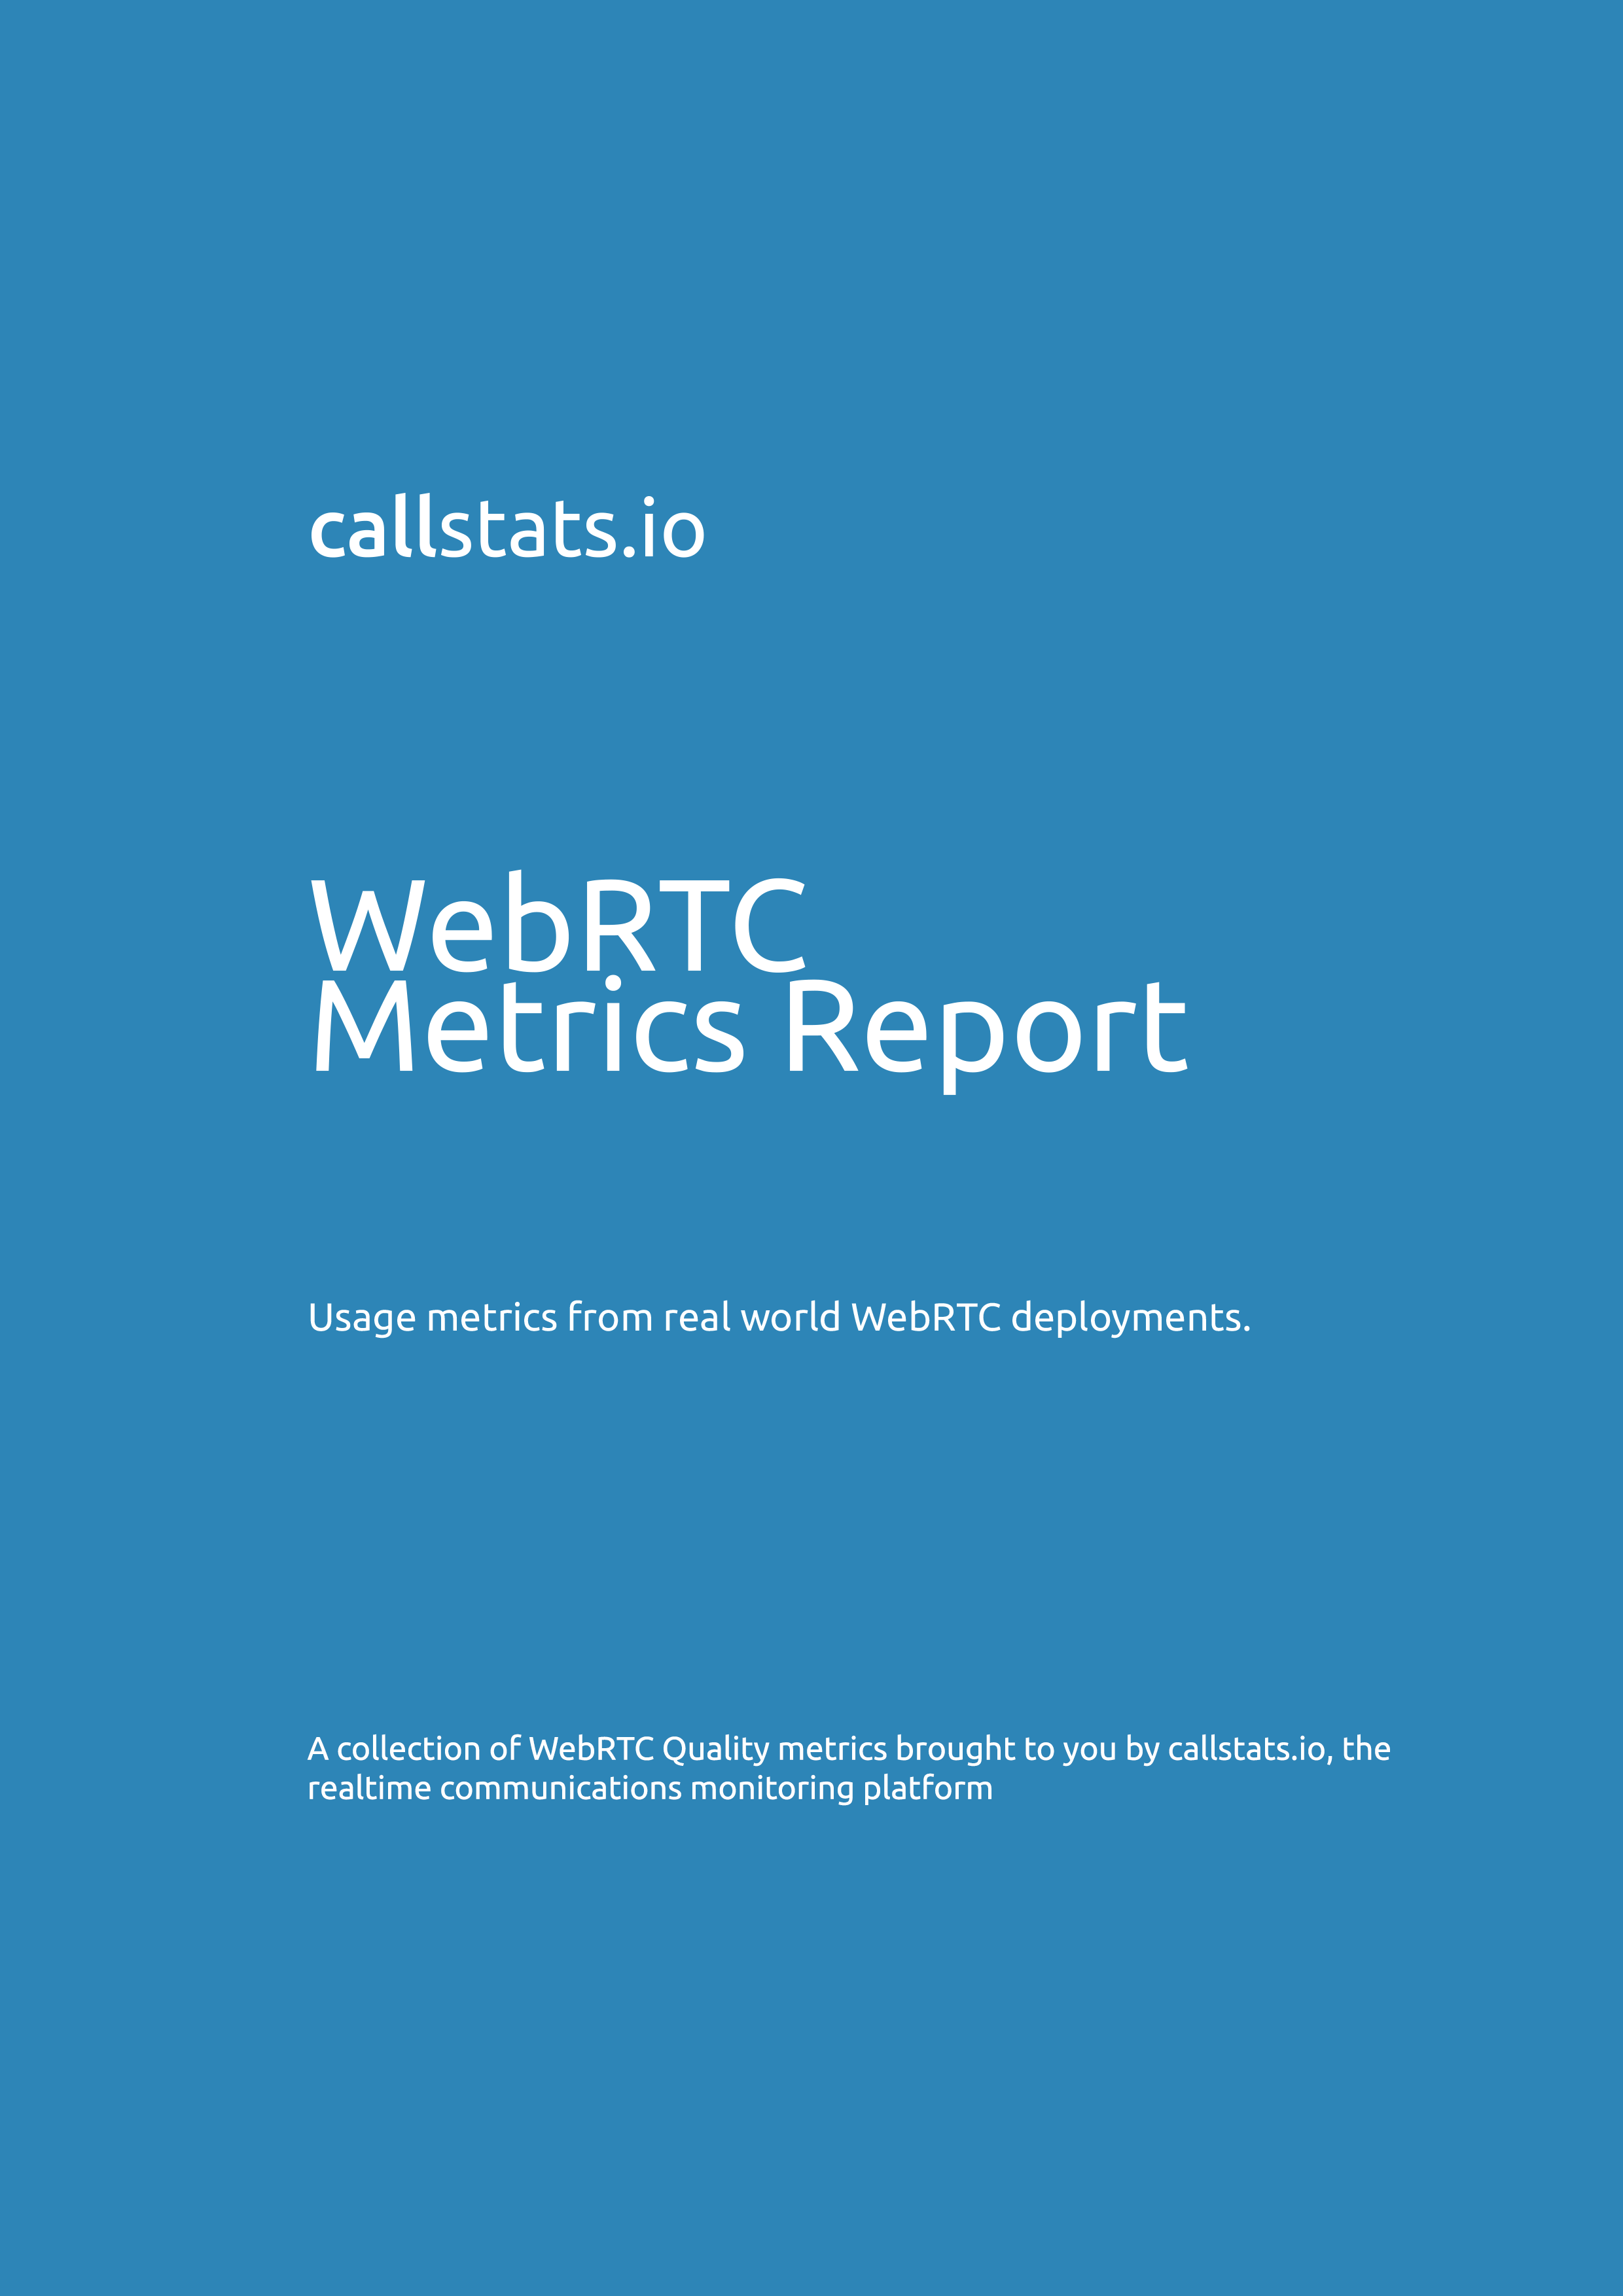 WebRTC Metrics Report by callstats.io